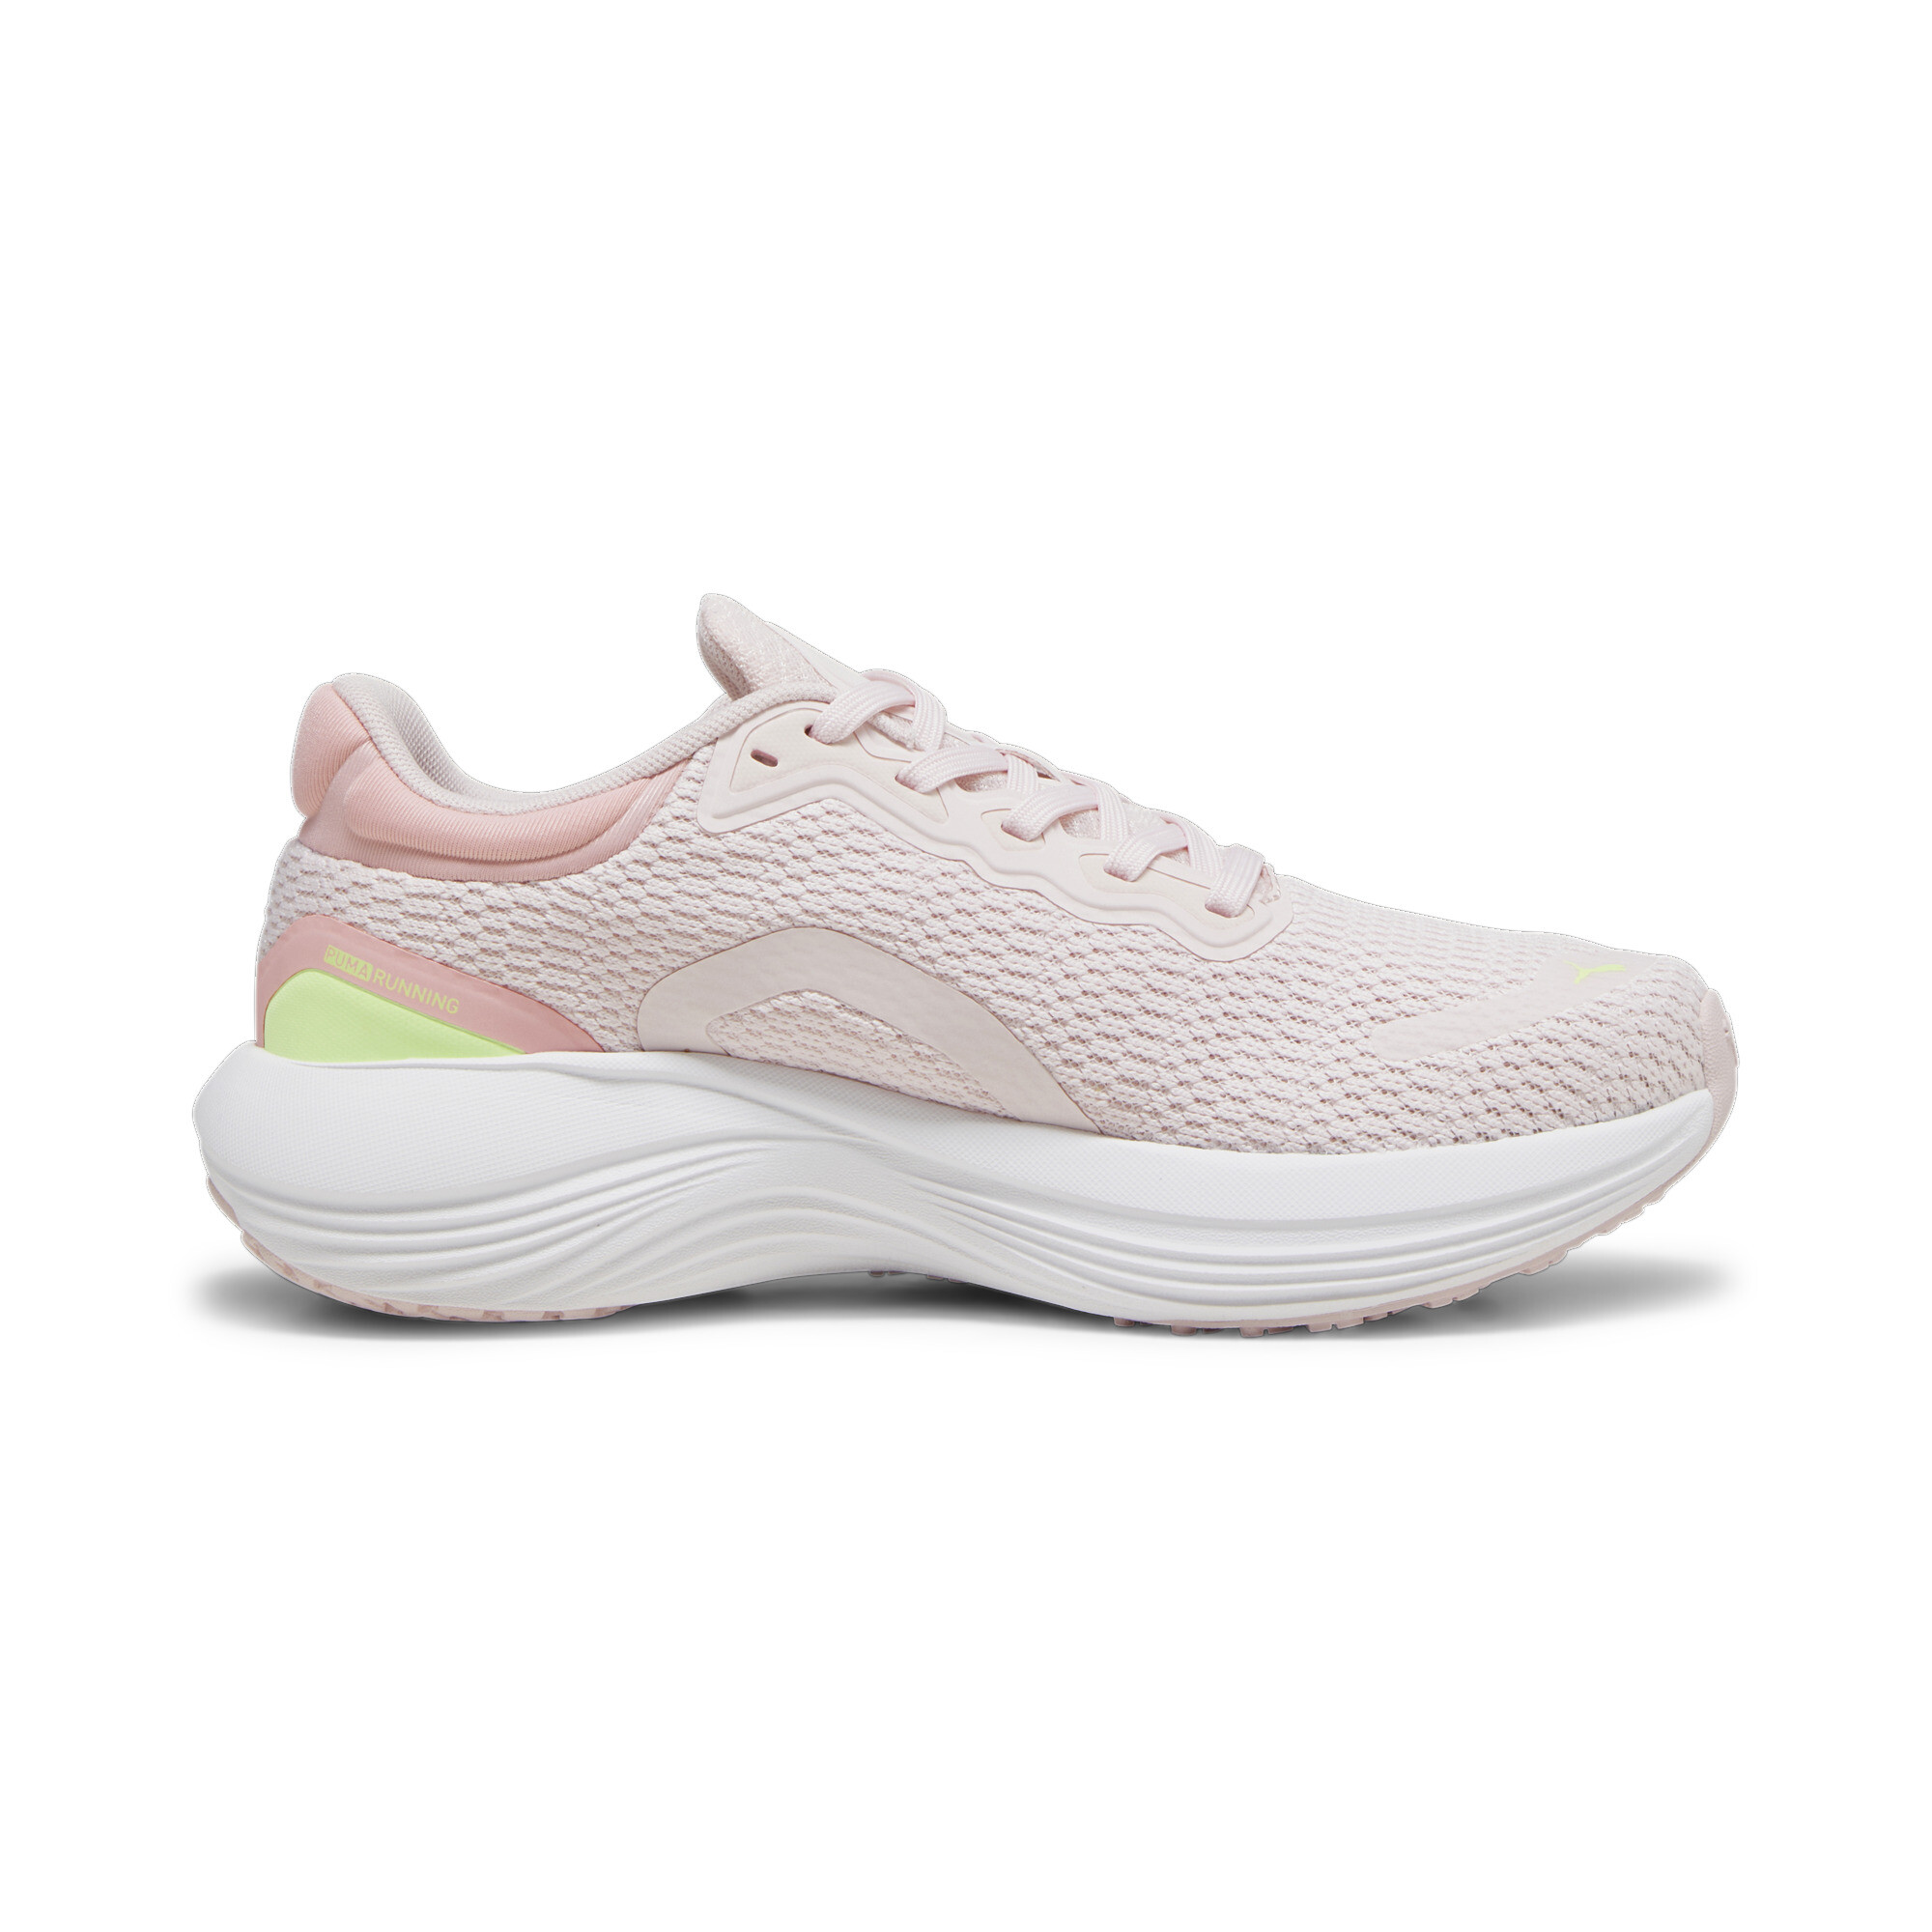 Men's PUMA Scend Pro Running Shoes In Pink, Size EU 40.5